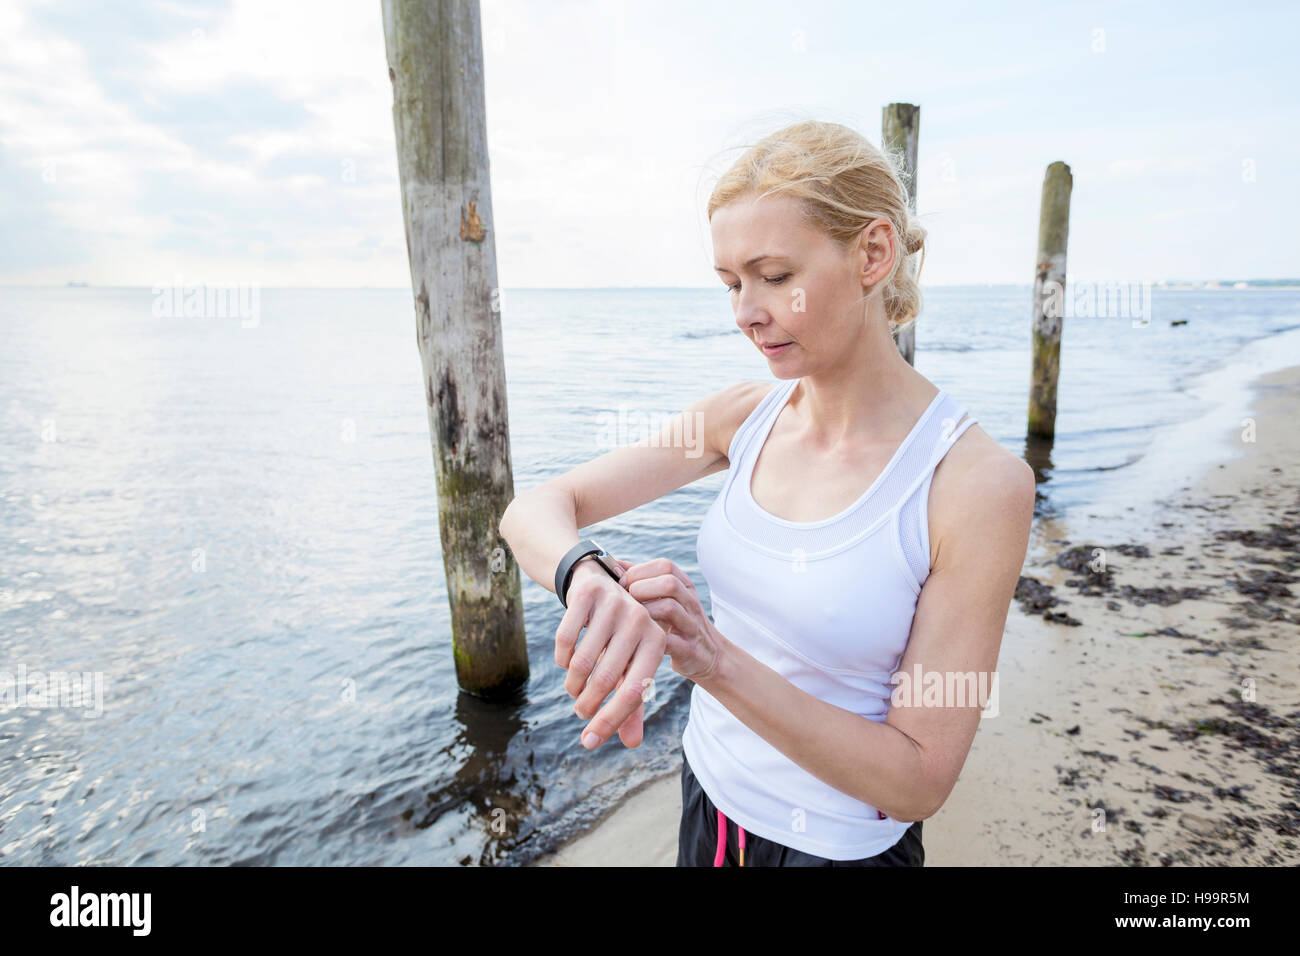 Woman on beach checking running watch Stock Photo